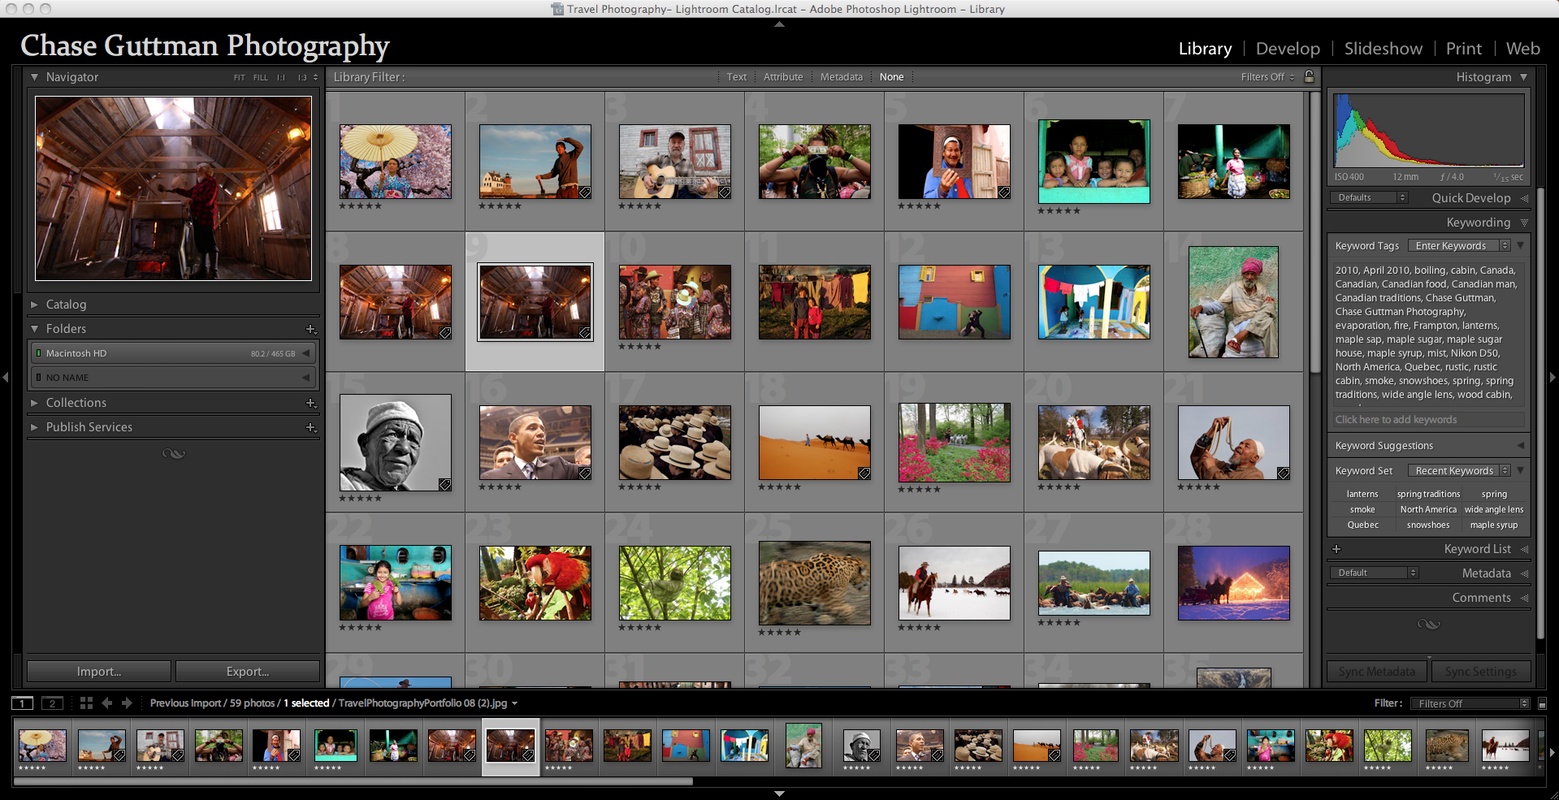 Adobe Photoshop Lightroom 5.7.1 for Mac Screenshot 1